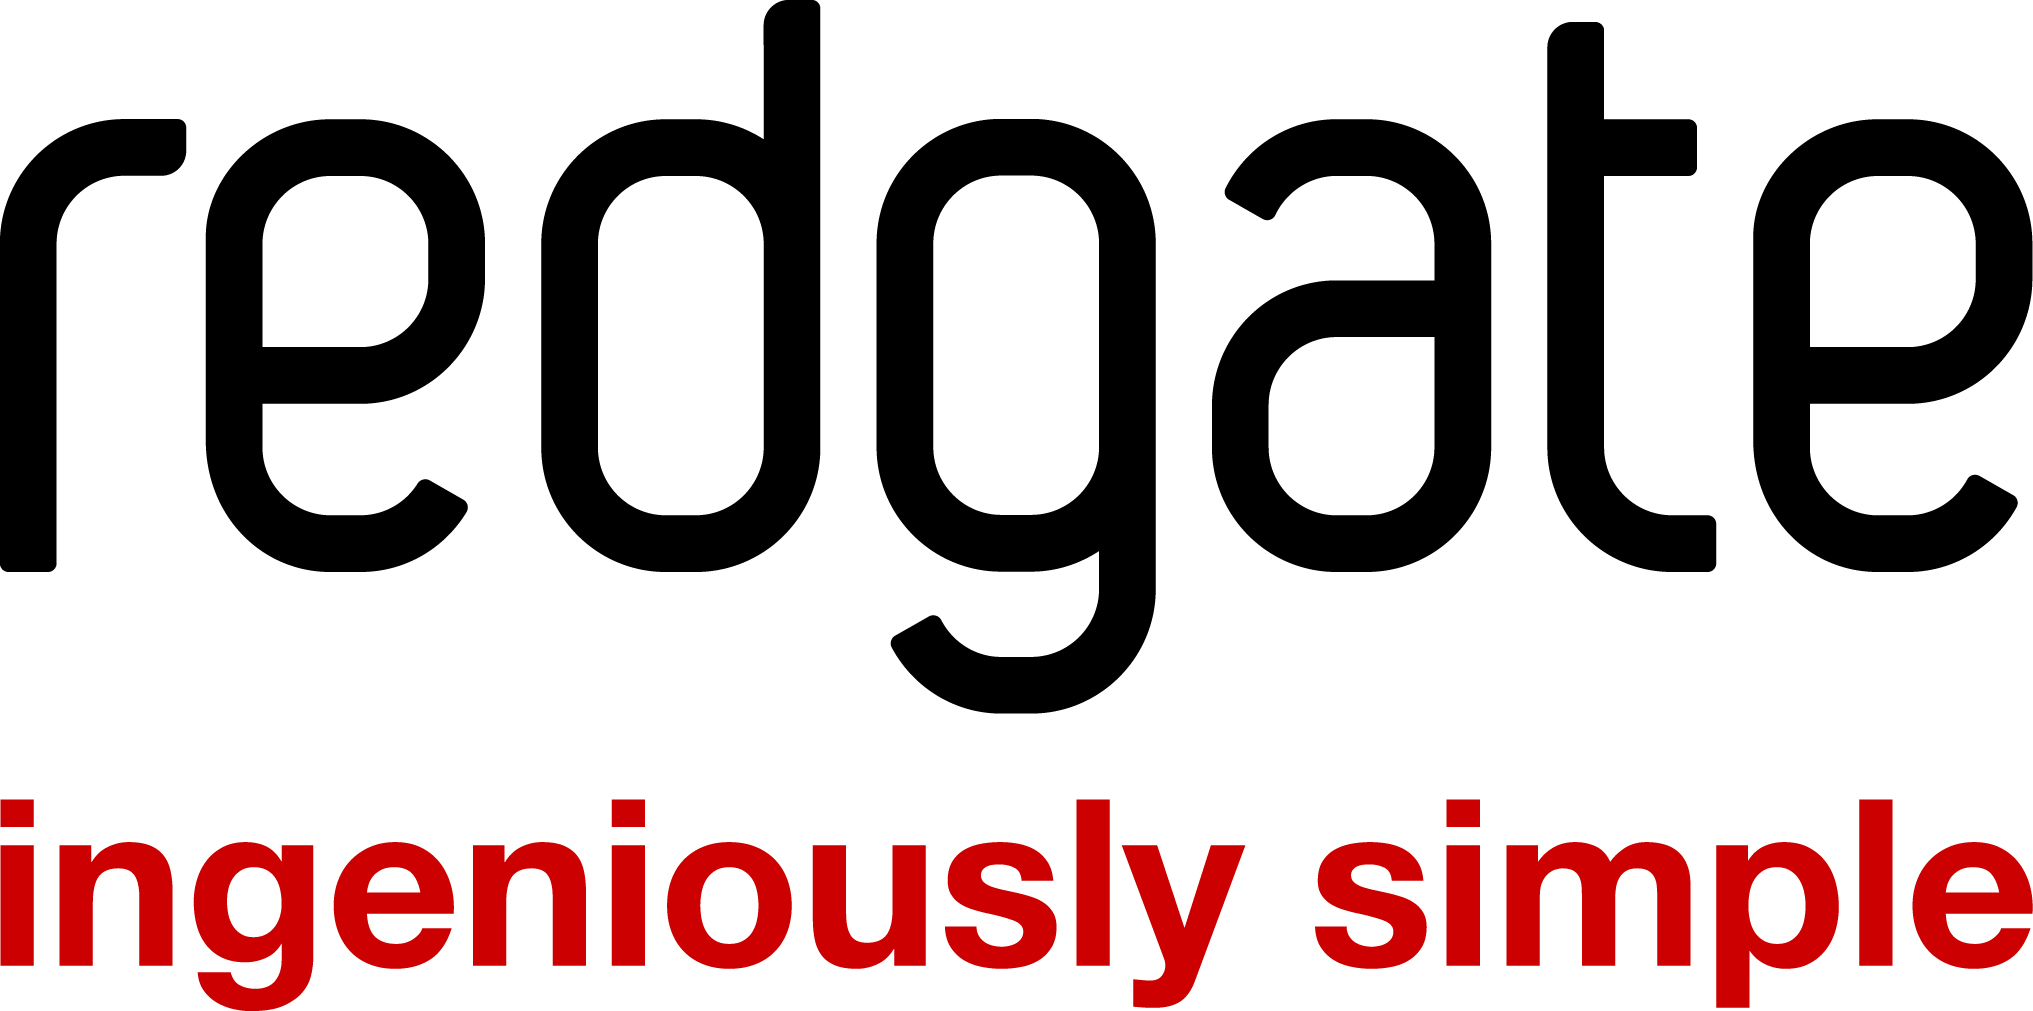 RedGate Logo